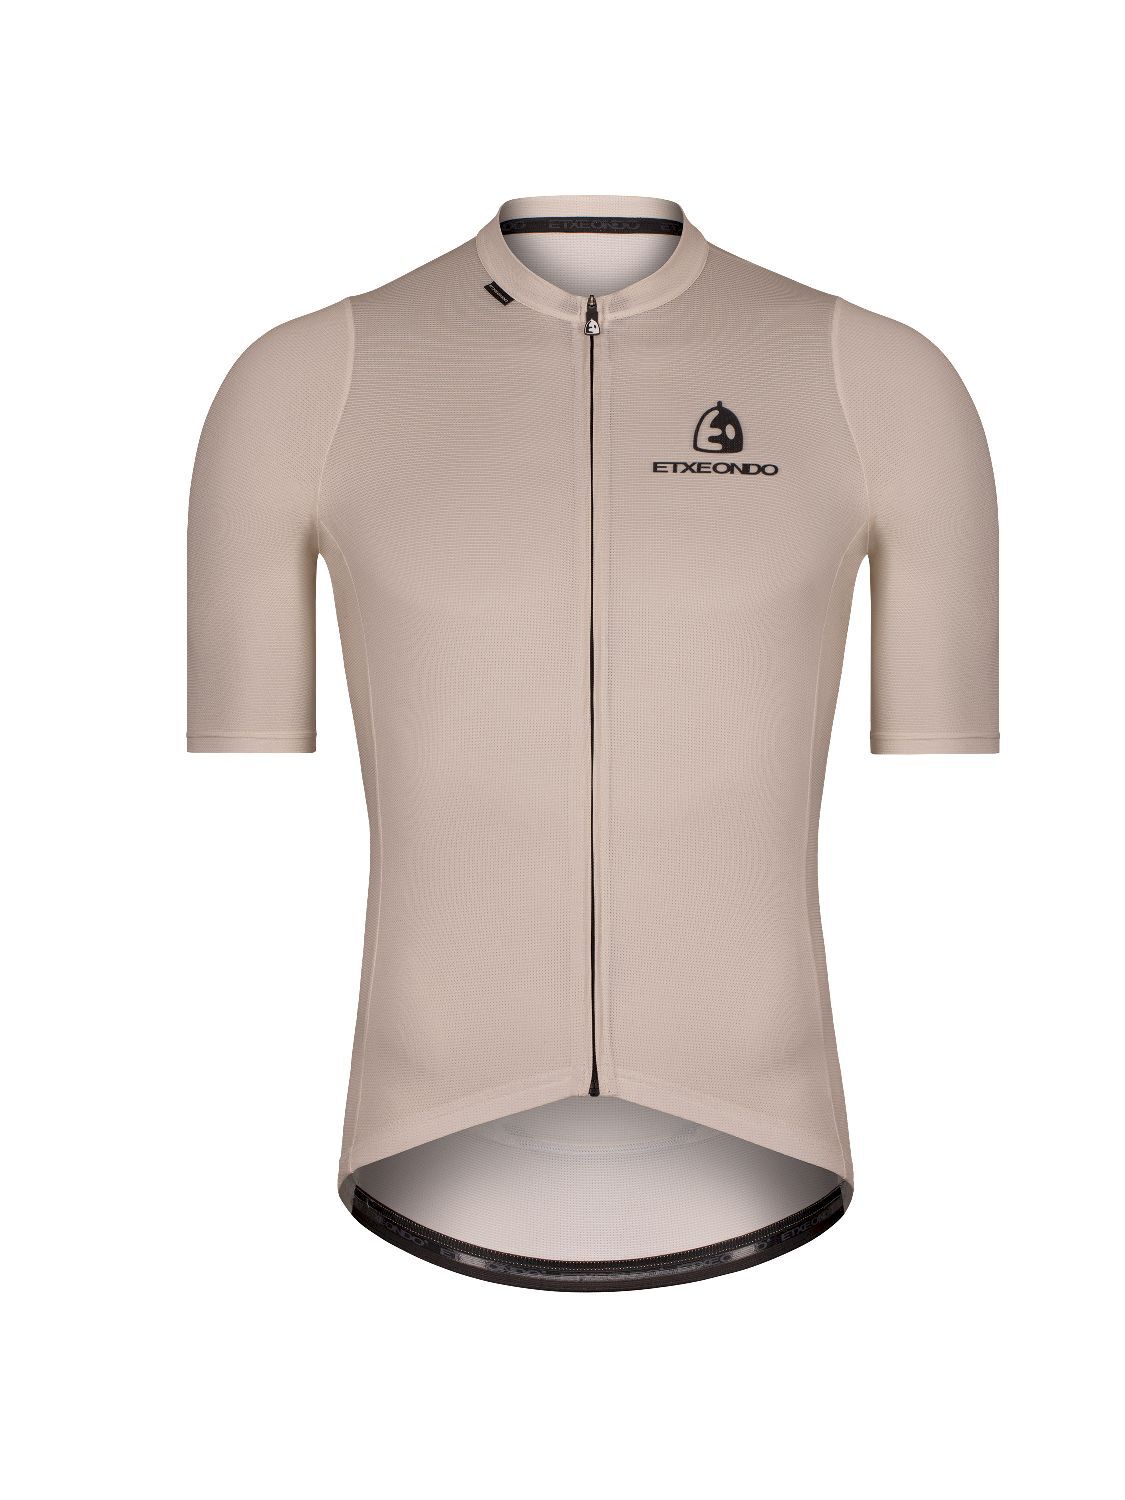 Etxeondo Batu - Cycling jersey - Men's